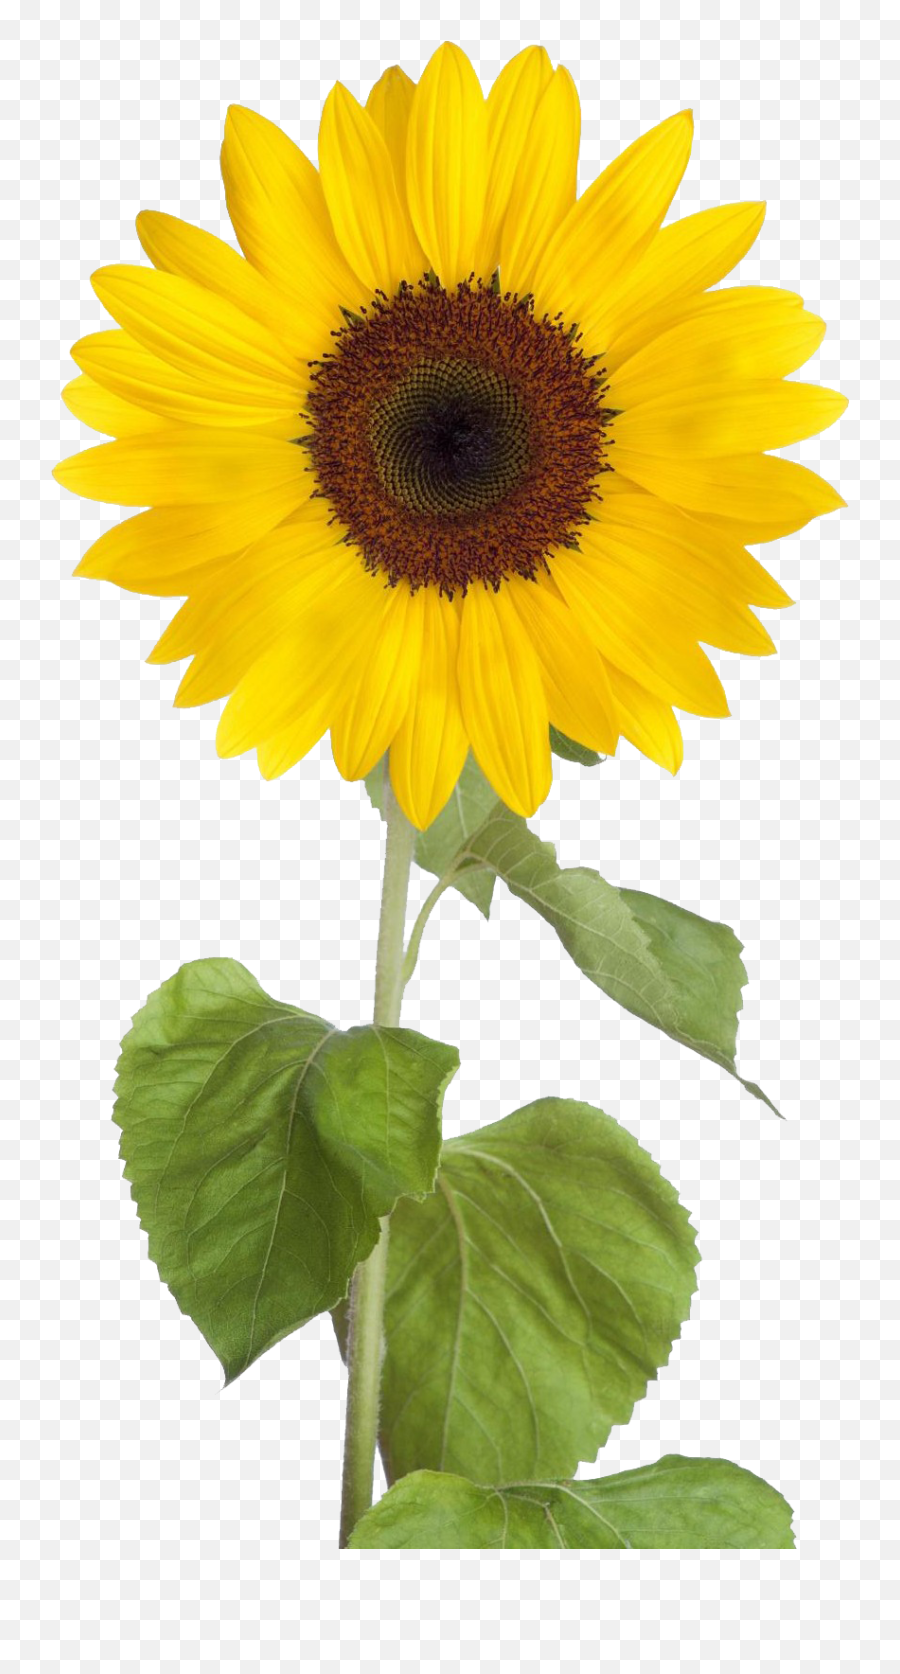 Sunflower Png Transparent Background - Sunflowers Clipart Transparent Background,Sunflower Transparent Background